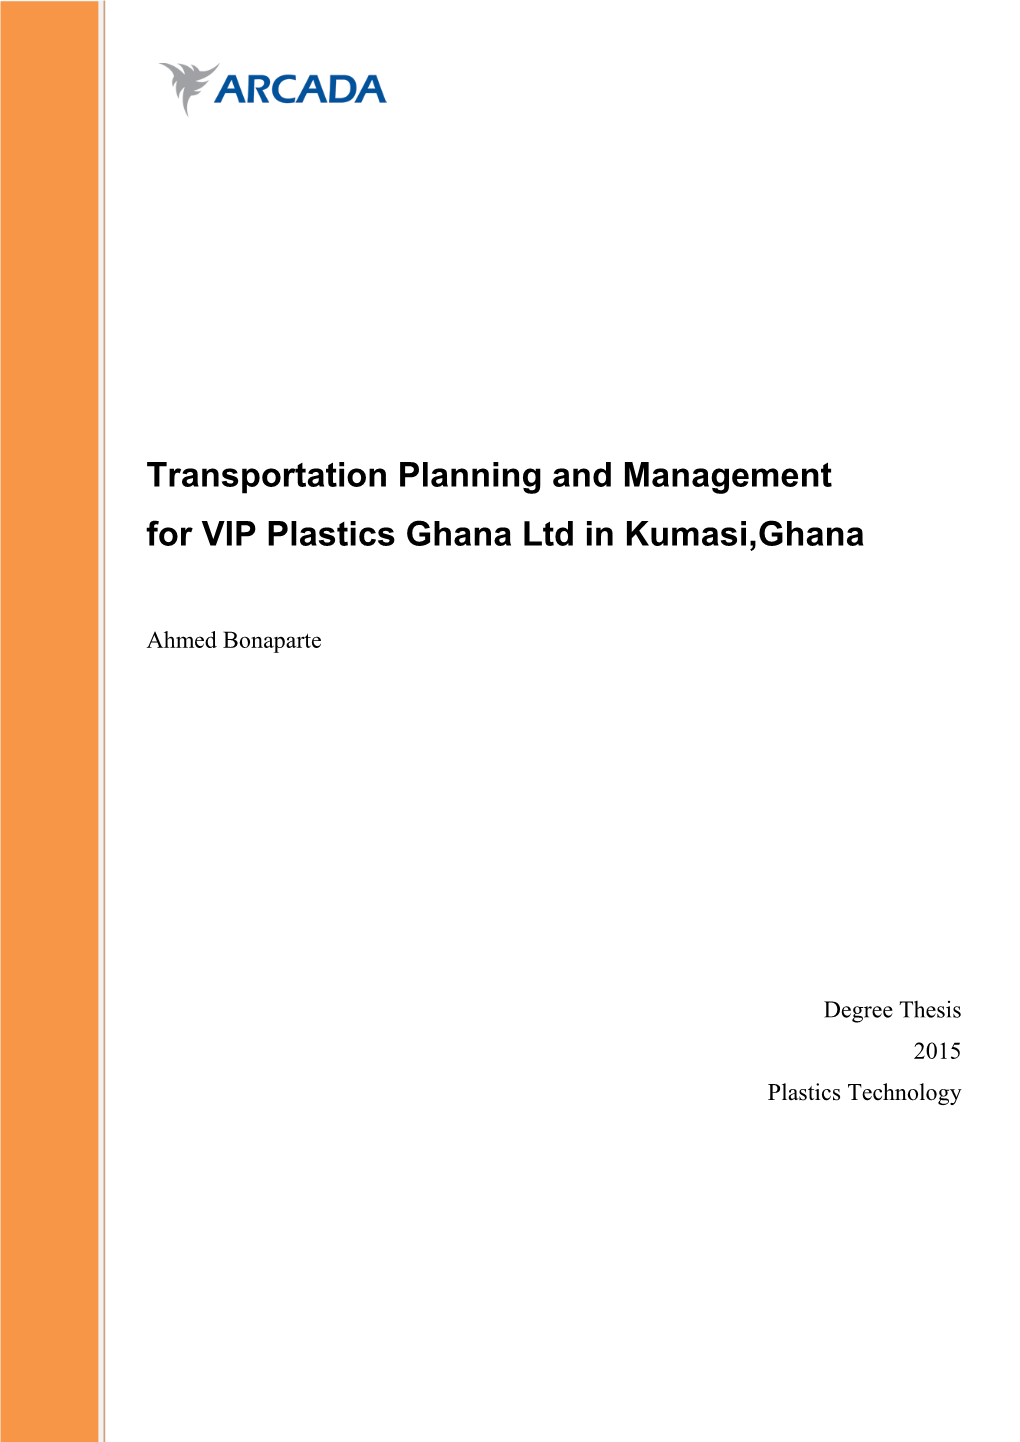 Transportation Planning and Management for VIP Plastics Ghana Ltd in Kumasi,Ghana